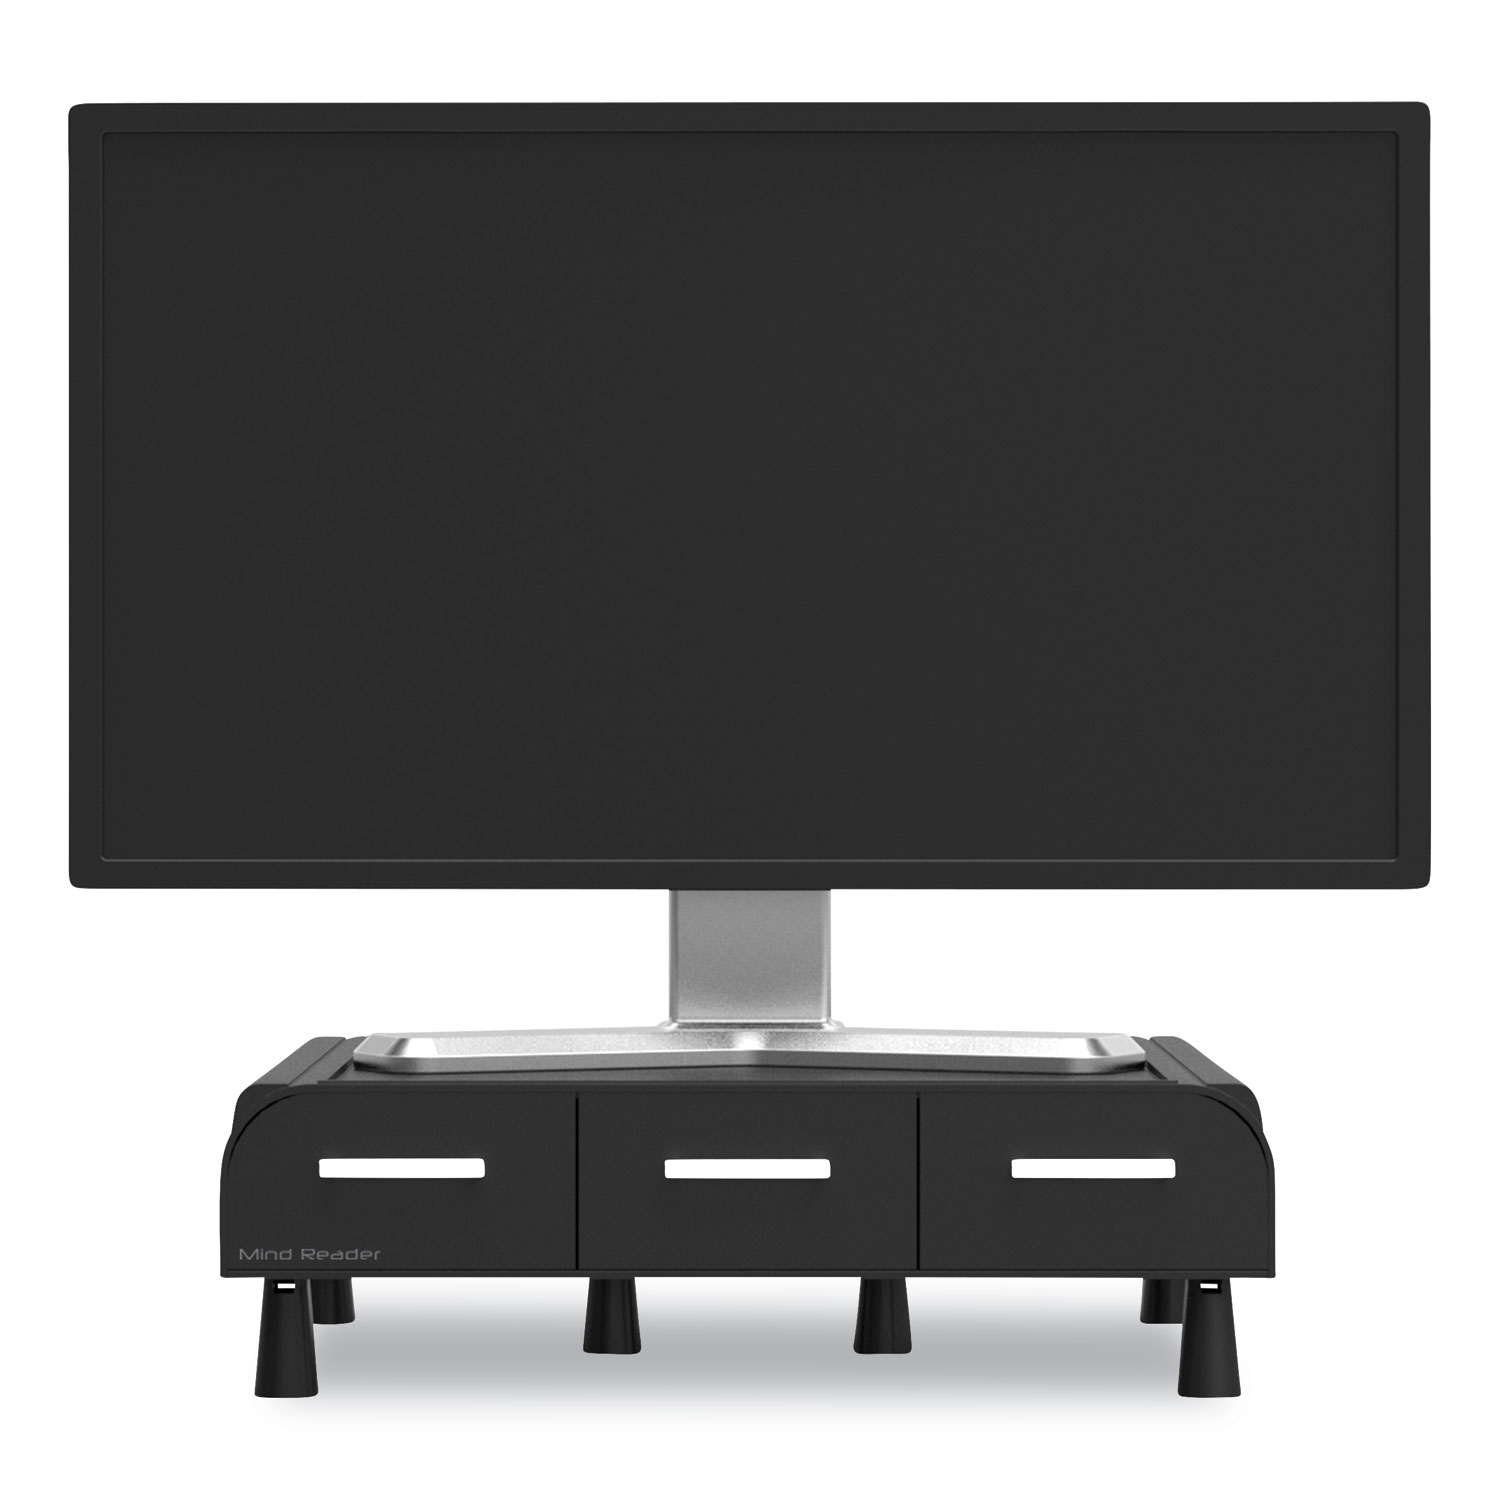  Mind Reader MONSTA3D-BLK Perch Monitor Stand and Desk Organizer, 13.46 x 12.87 x 2.72, Black/Silver (EMS24395828) 